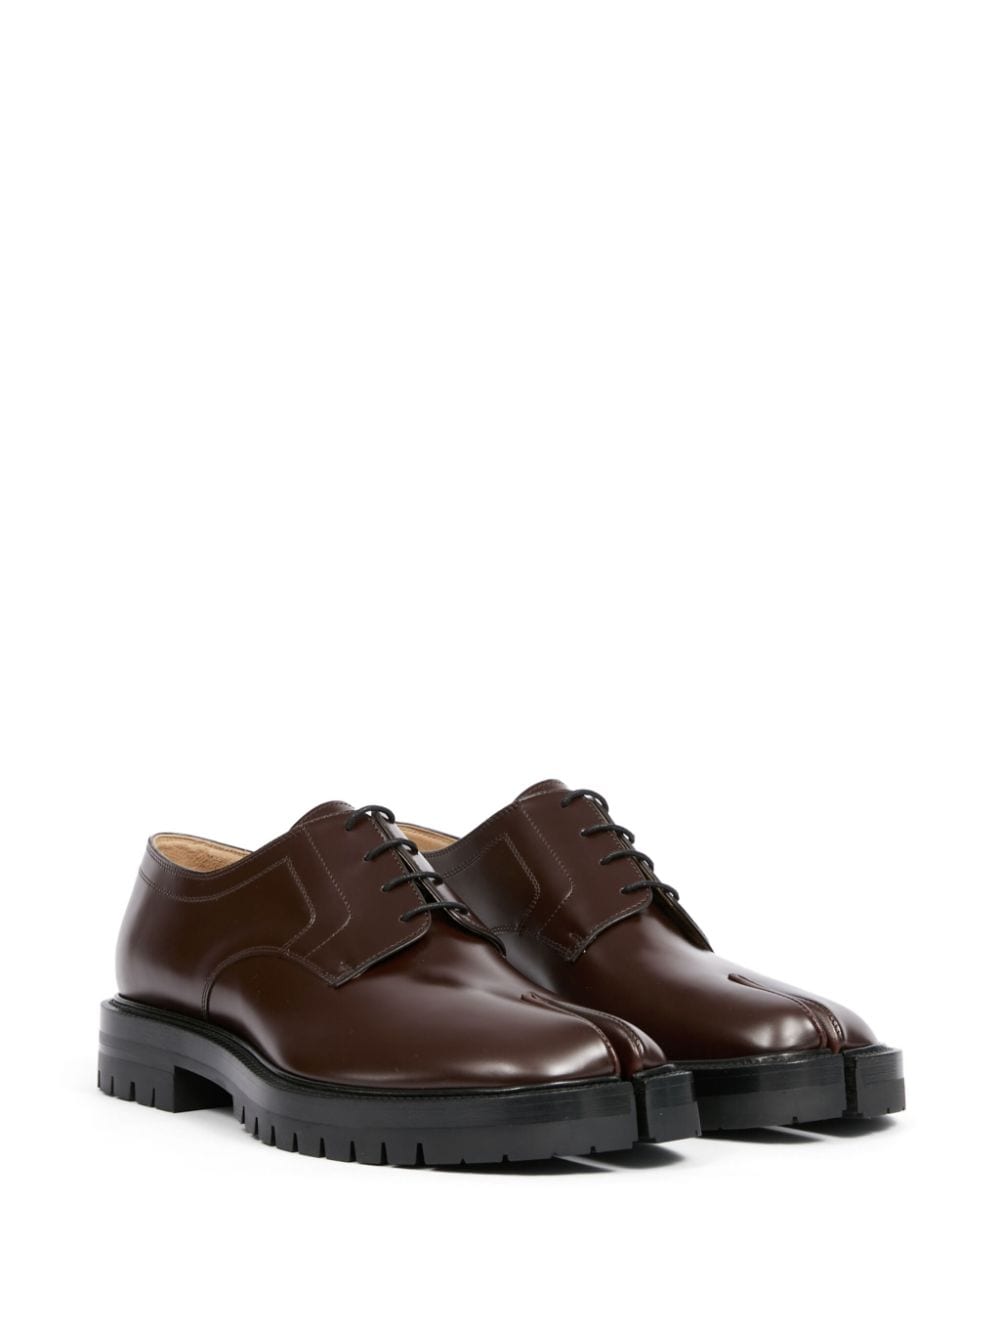 Maison Margiela Tabi leather derby shoes - Bruin